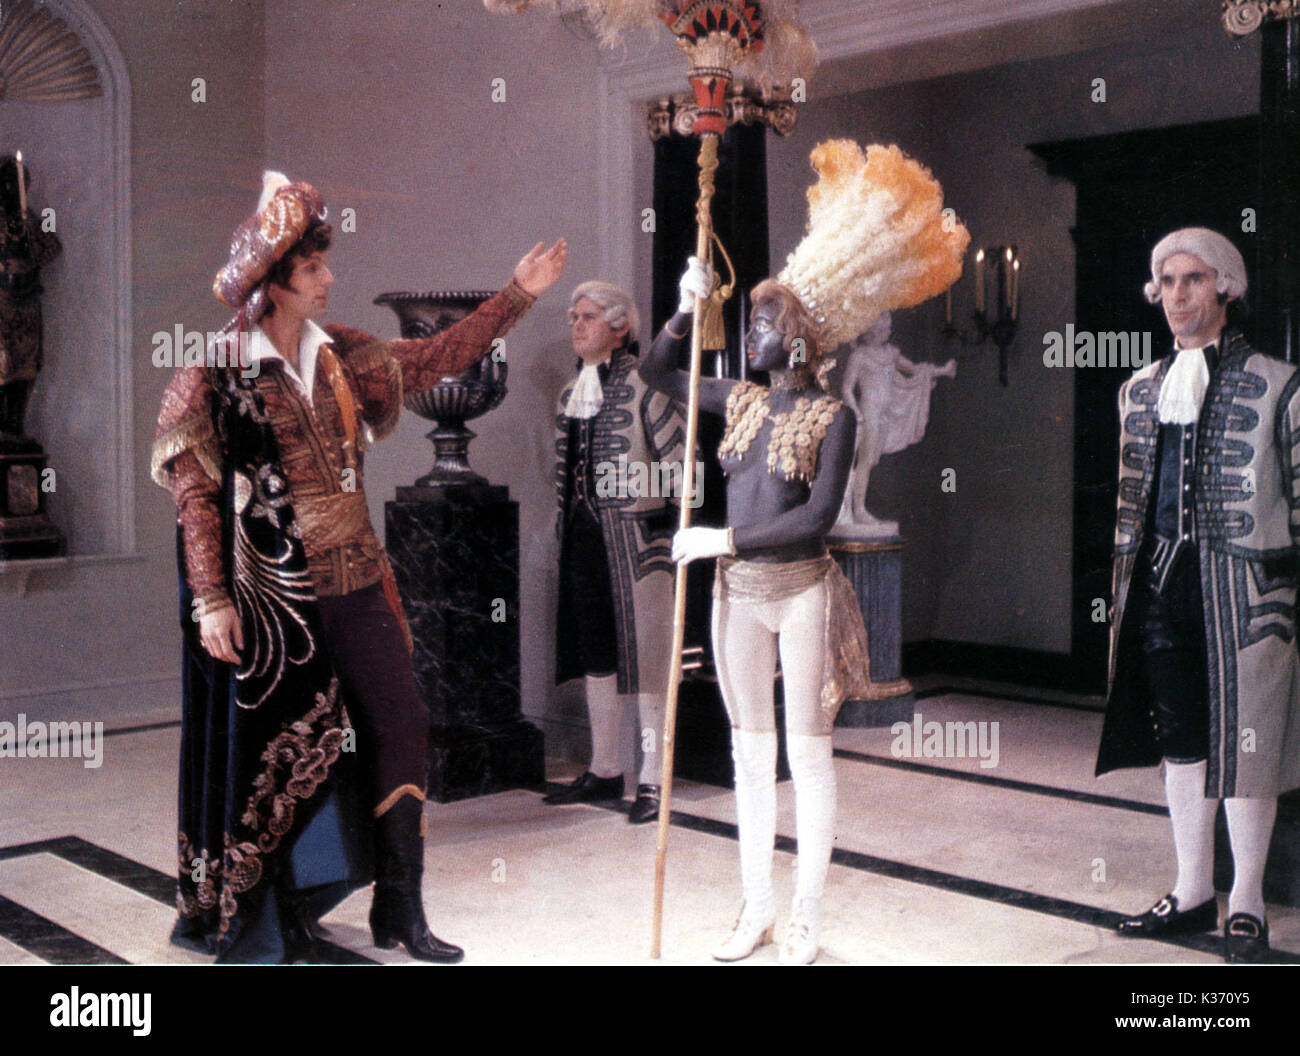 LADY CAROLINE LAMB RICHARD CHAMBERLAIN AND SARAH MILES AN MGM RELEASE     Date: 1972 Stock Photo